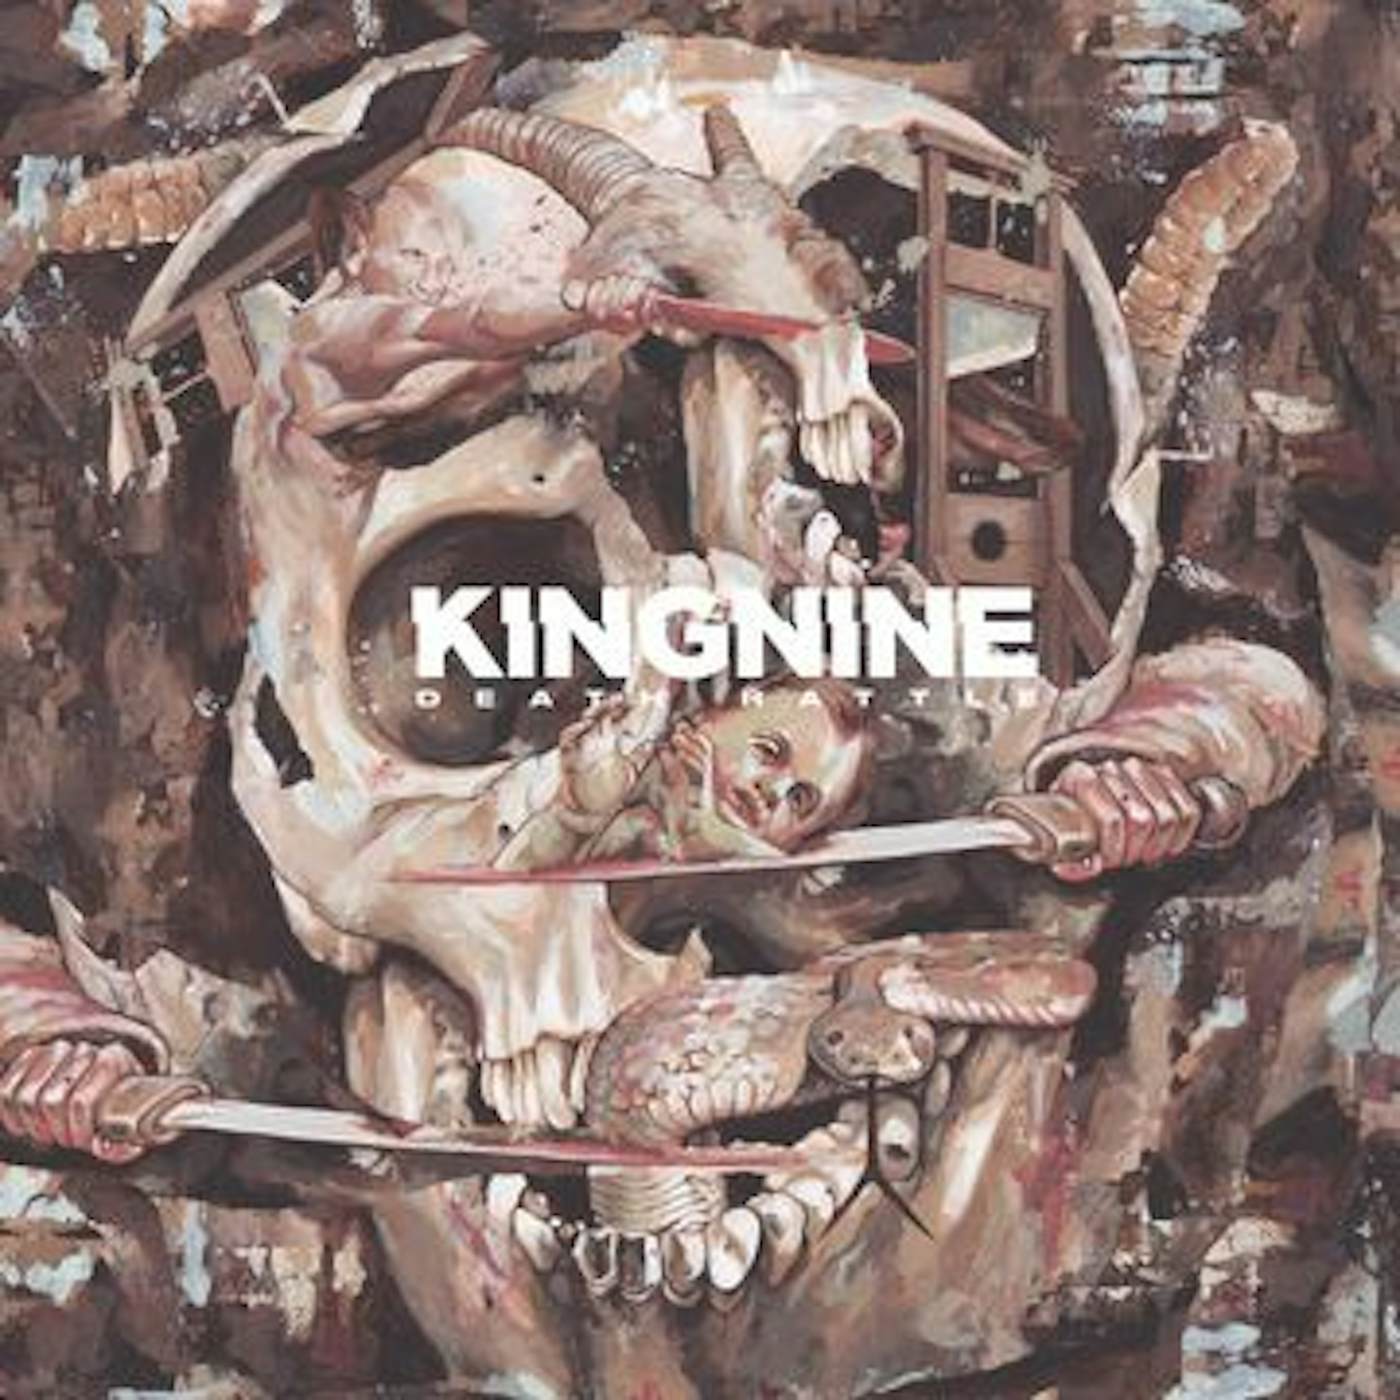 King Nine Death rattle Vinyl Record